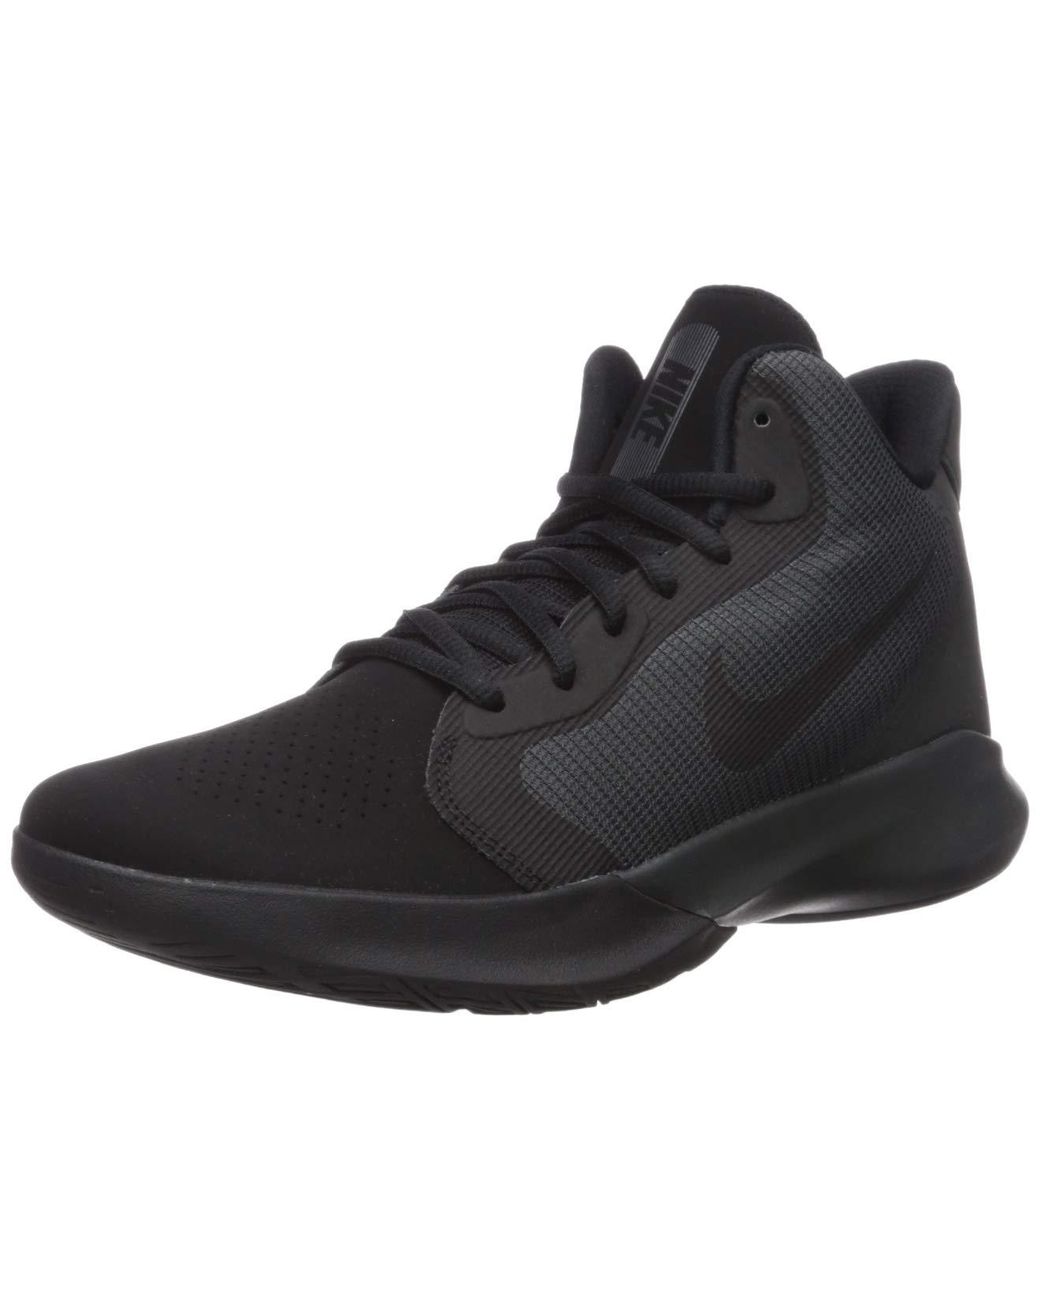 Nike Adult Precision Iii Nubuck Basketball Shoe in Black | Lyst